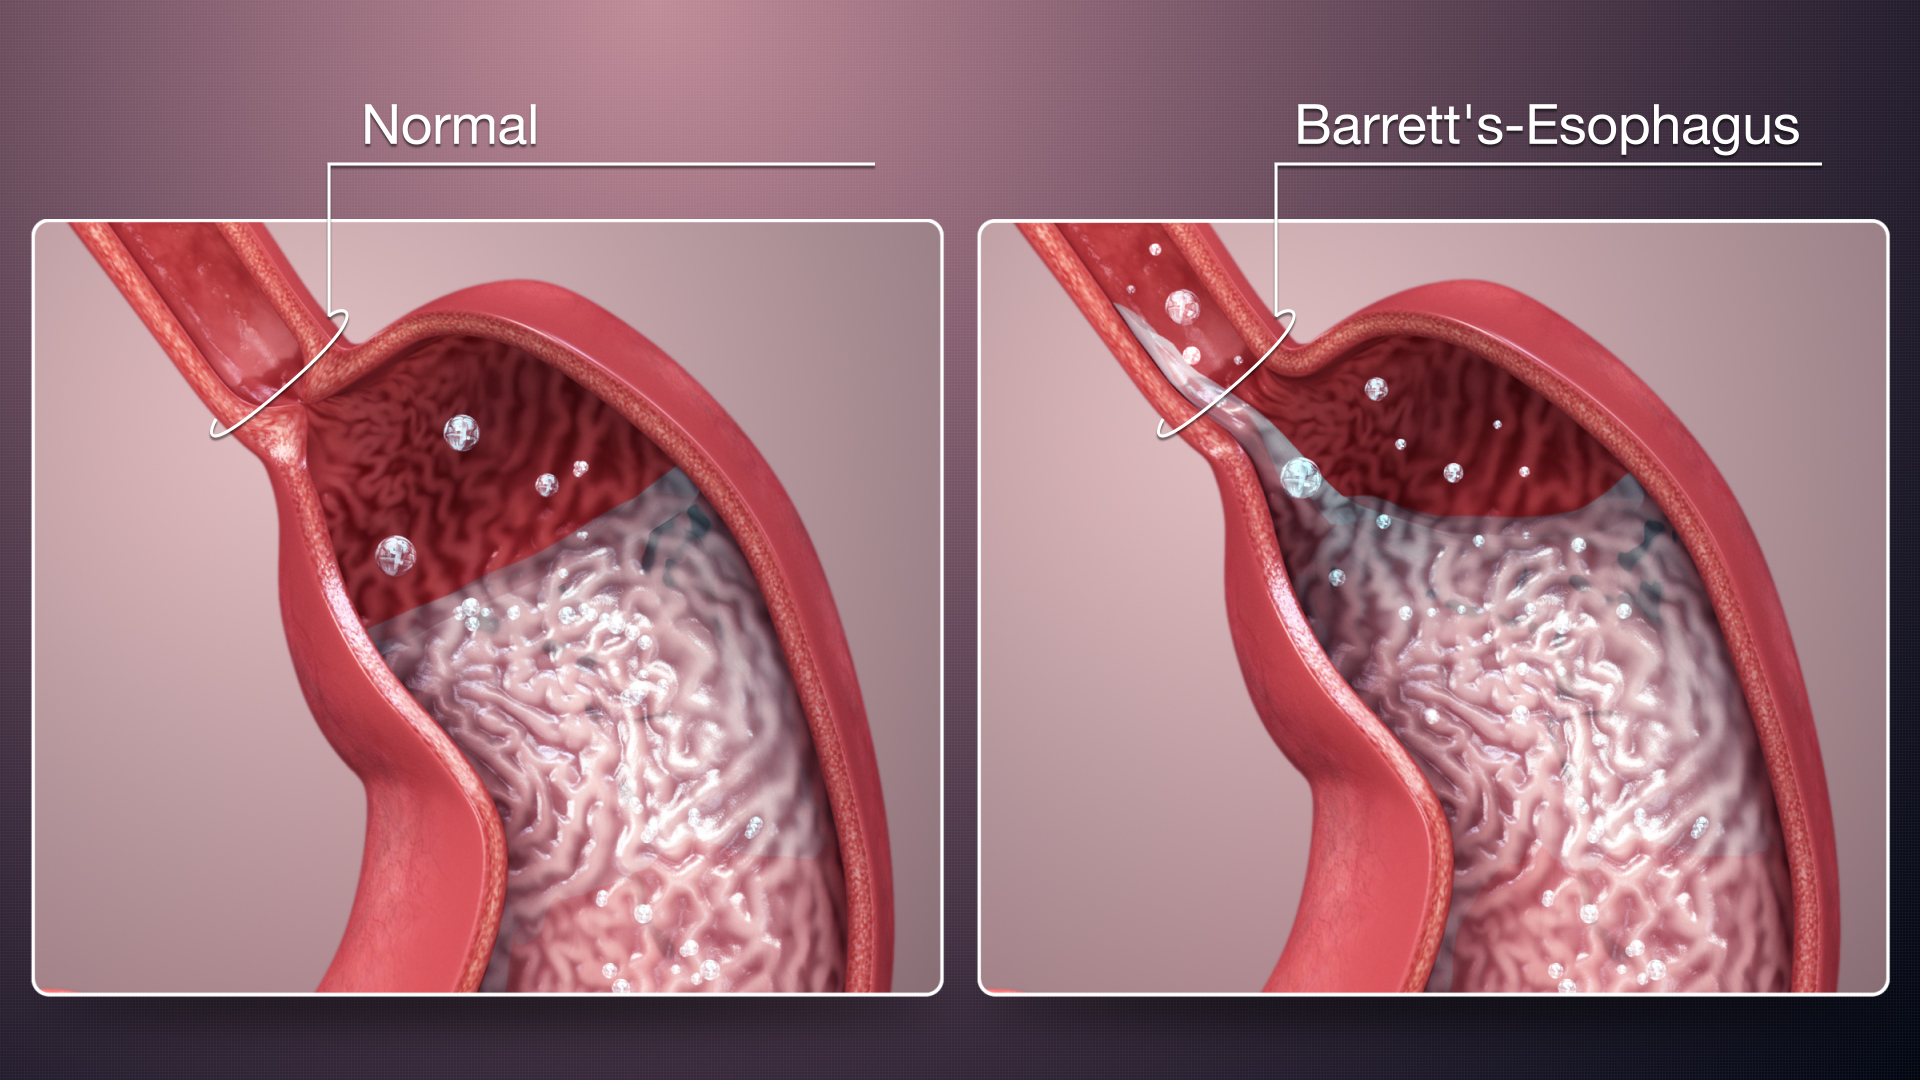 3D medical animation showing Barrett's Esophagus